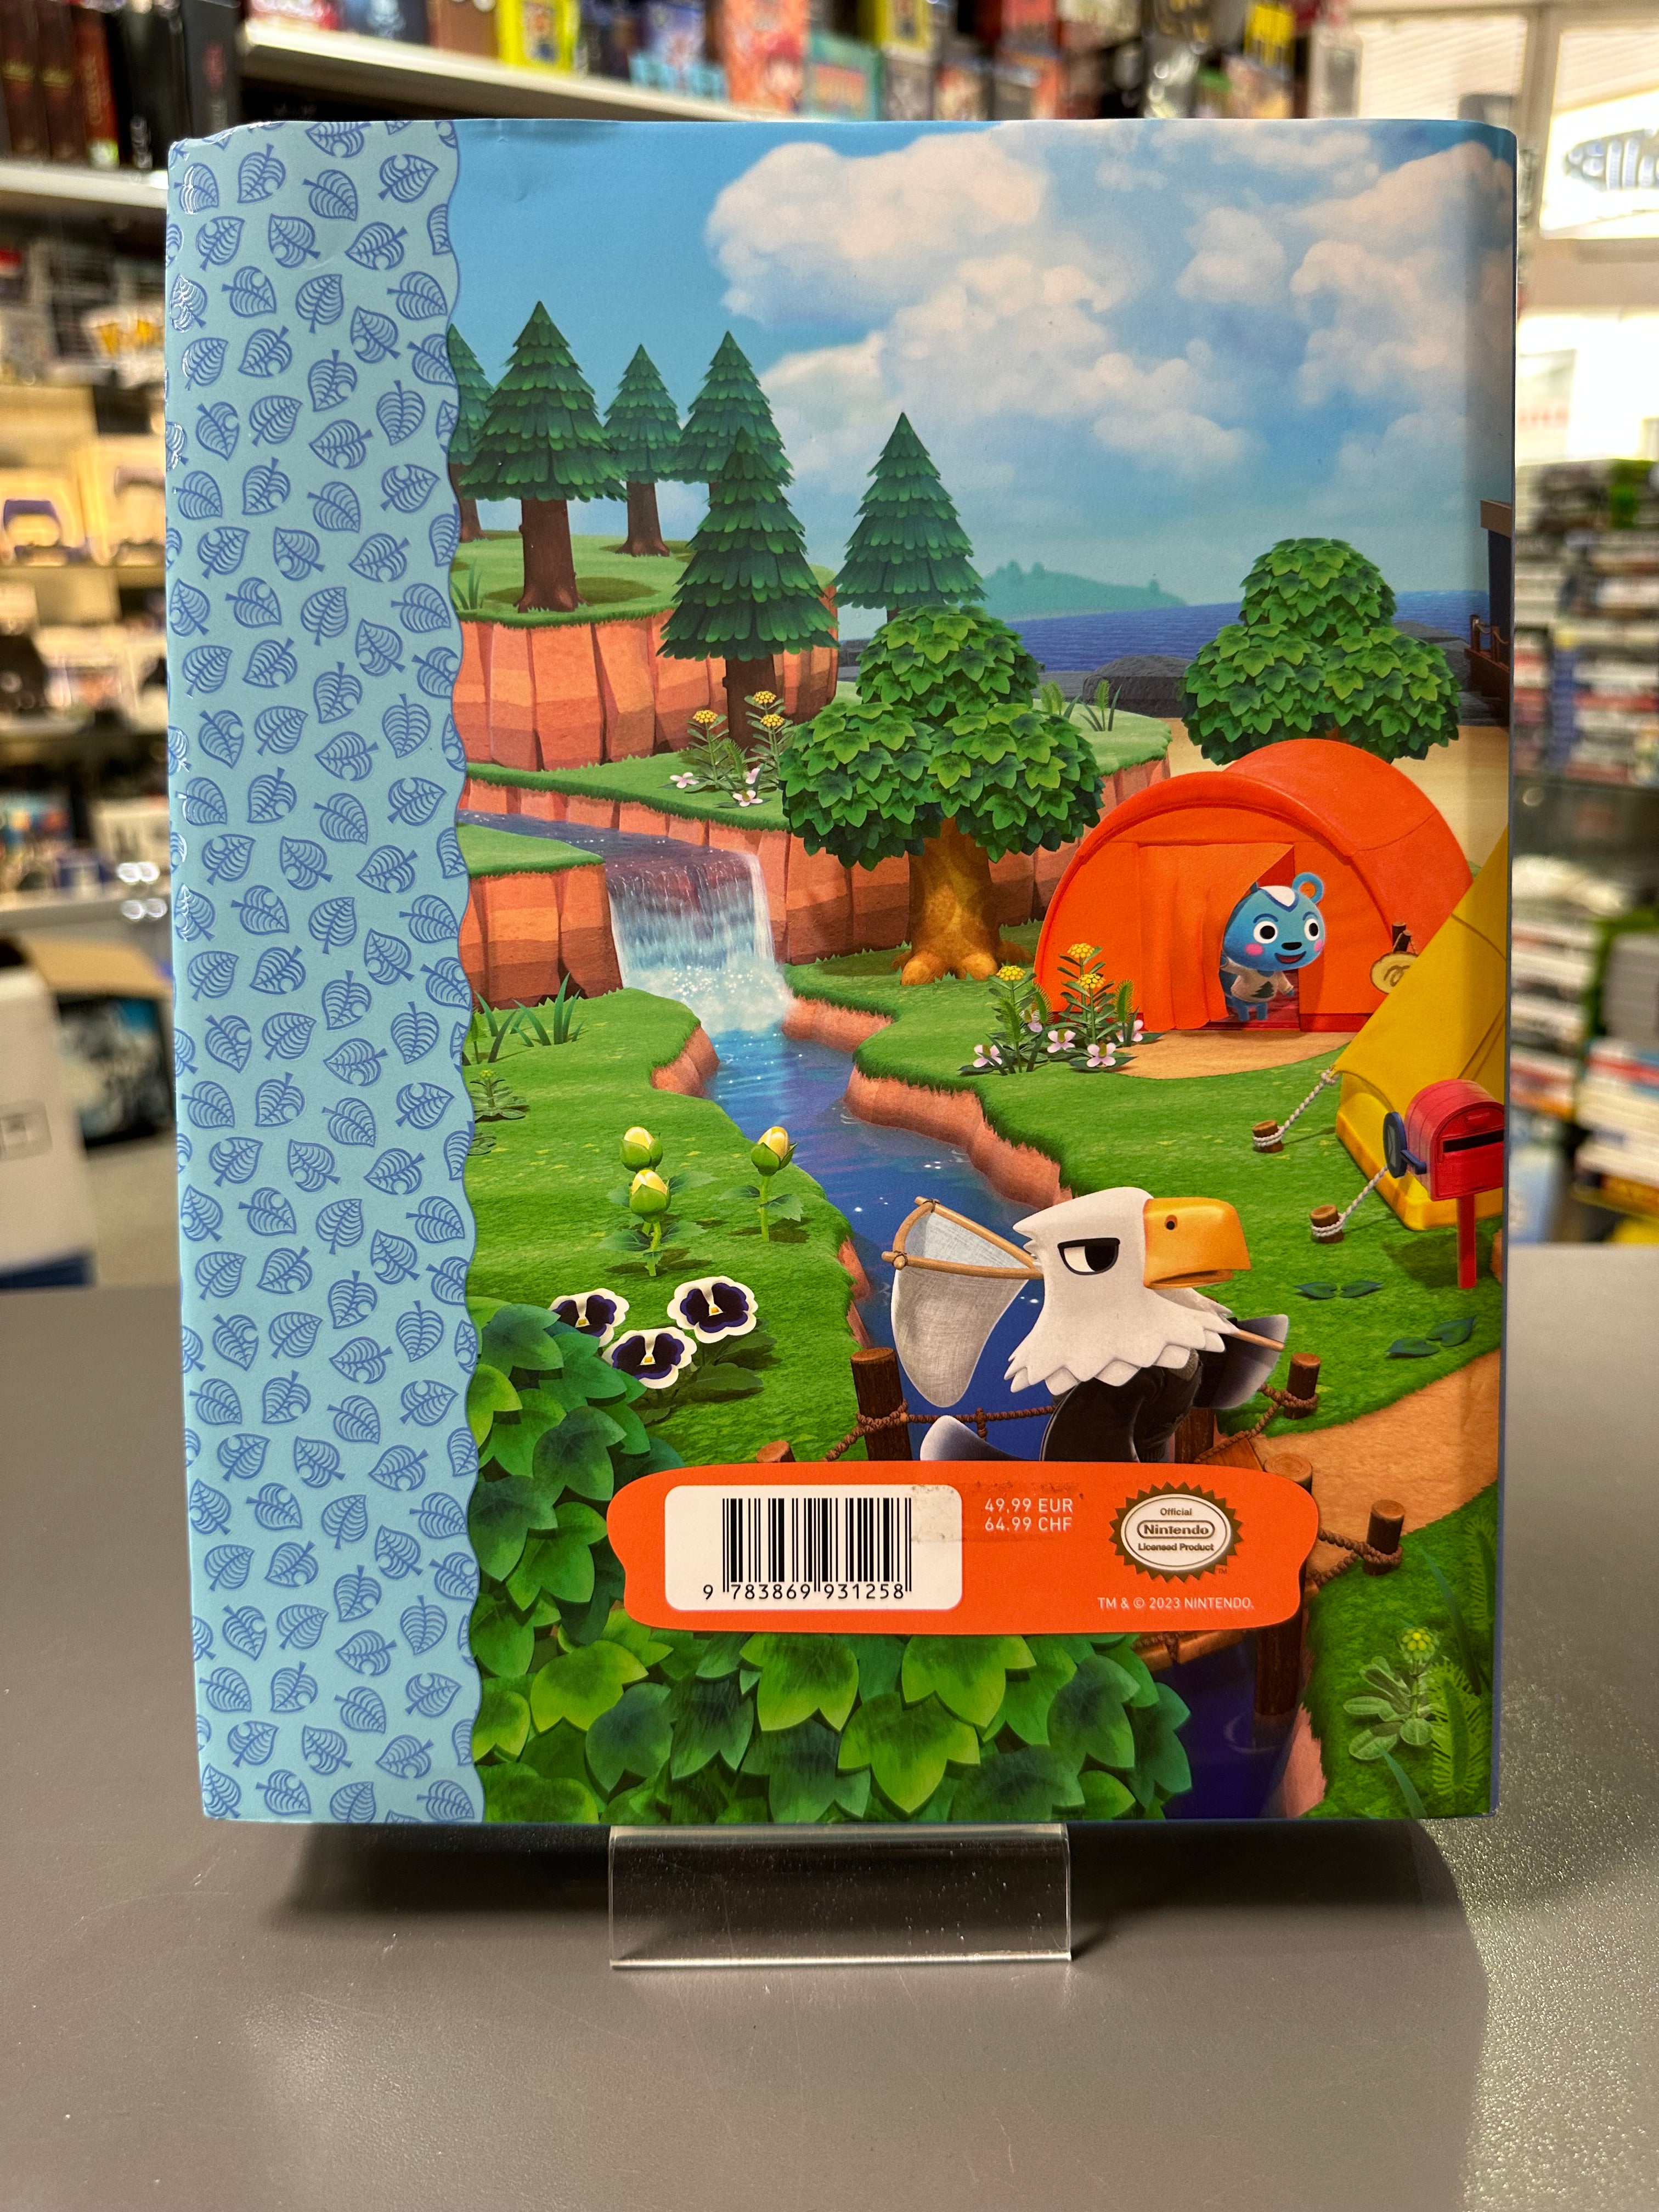 Animal Crossing - New Horizons - Das offizielle komplette Begleitbuch (Sammlerausgabe)